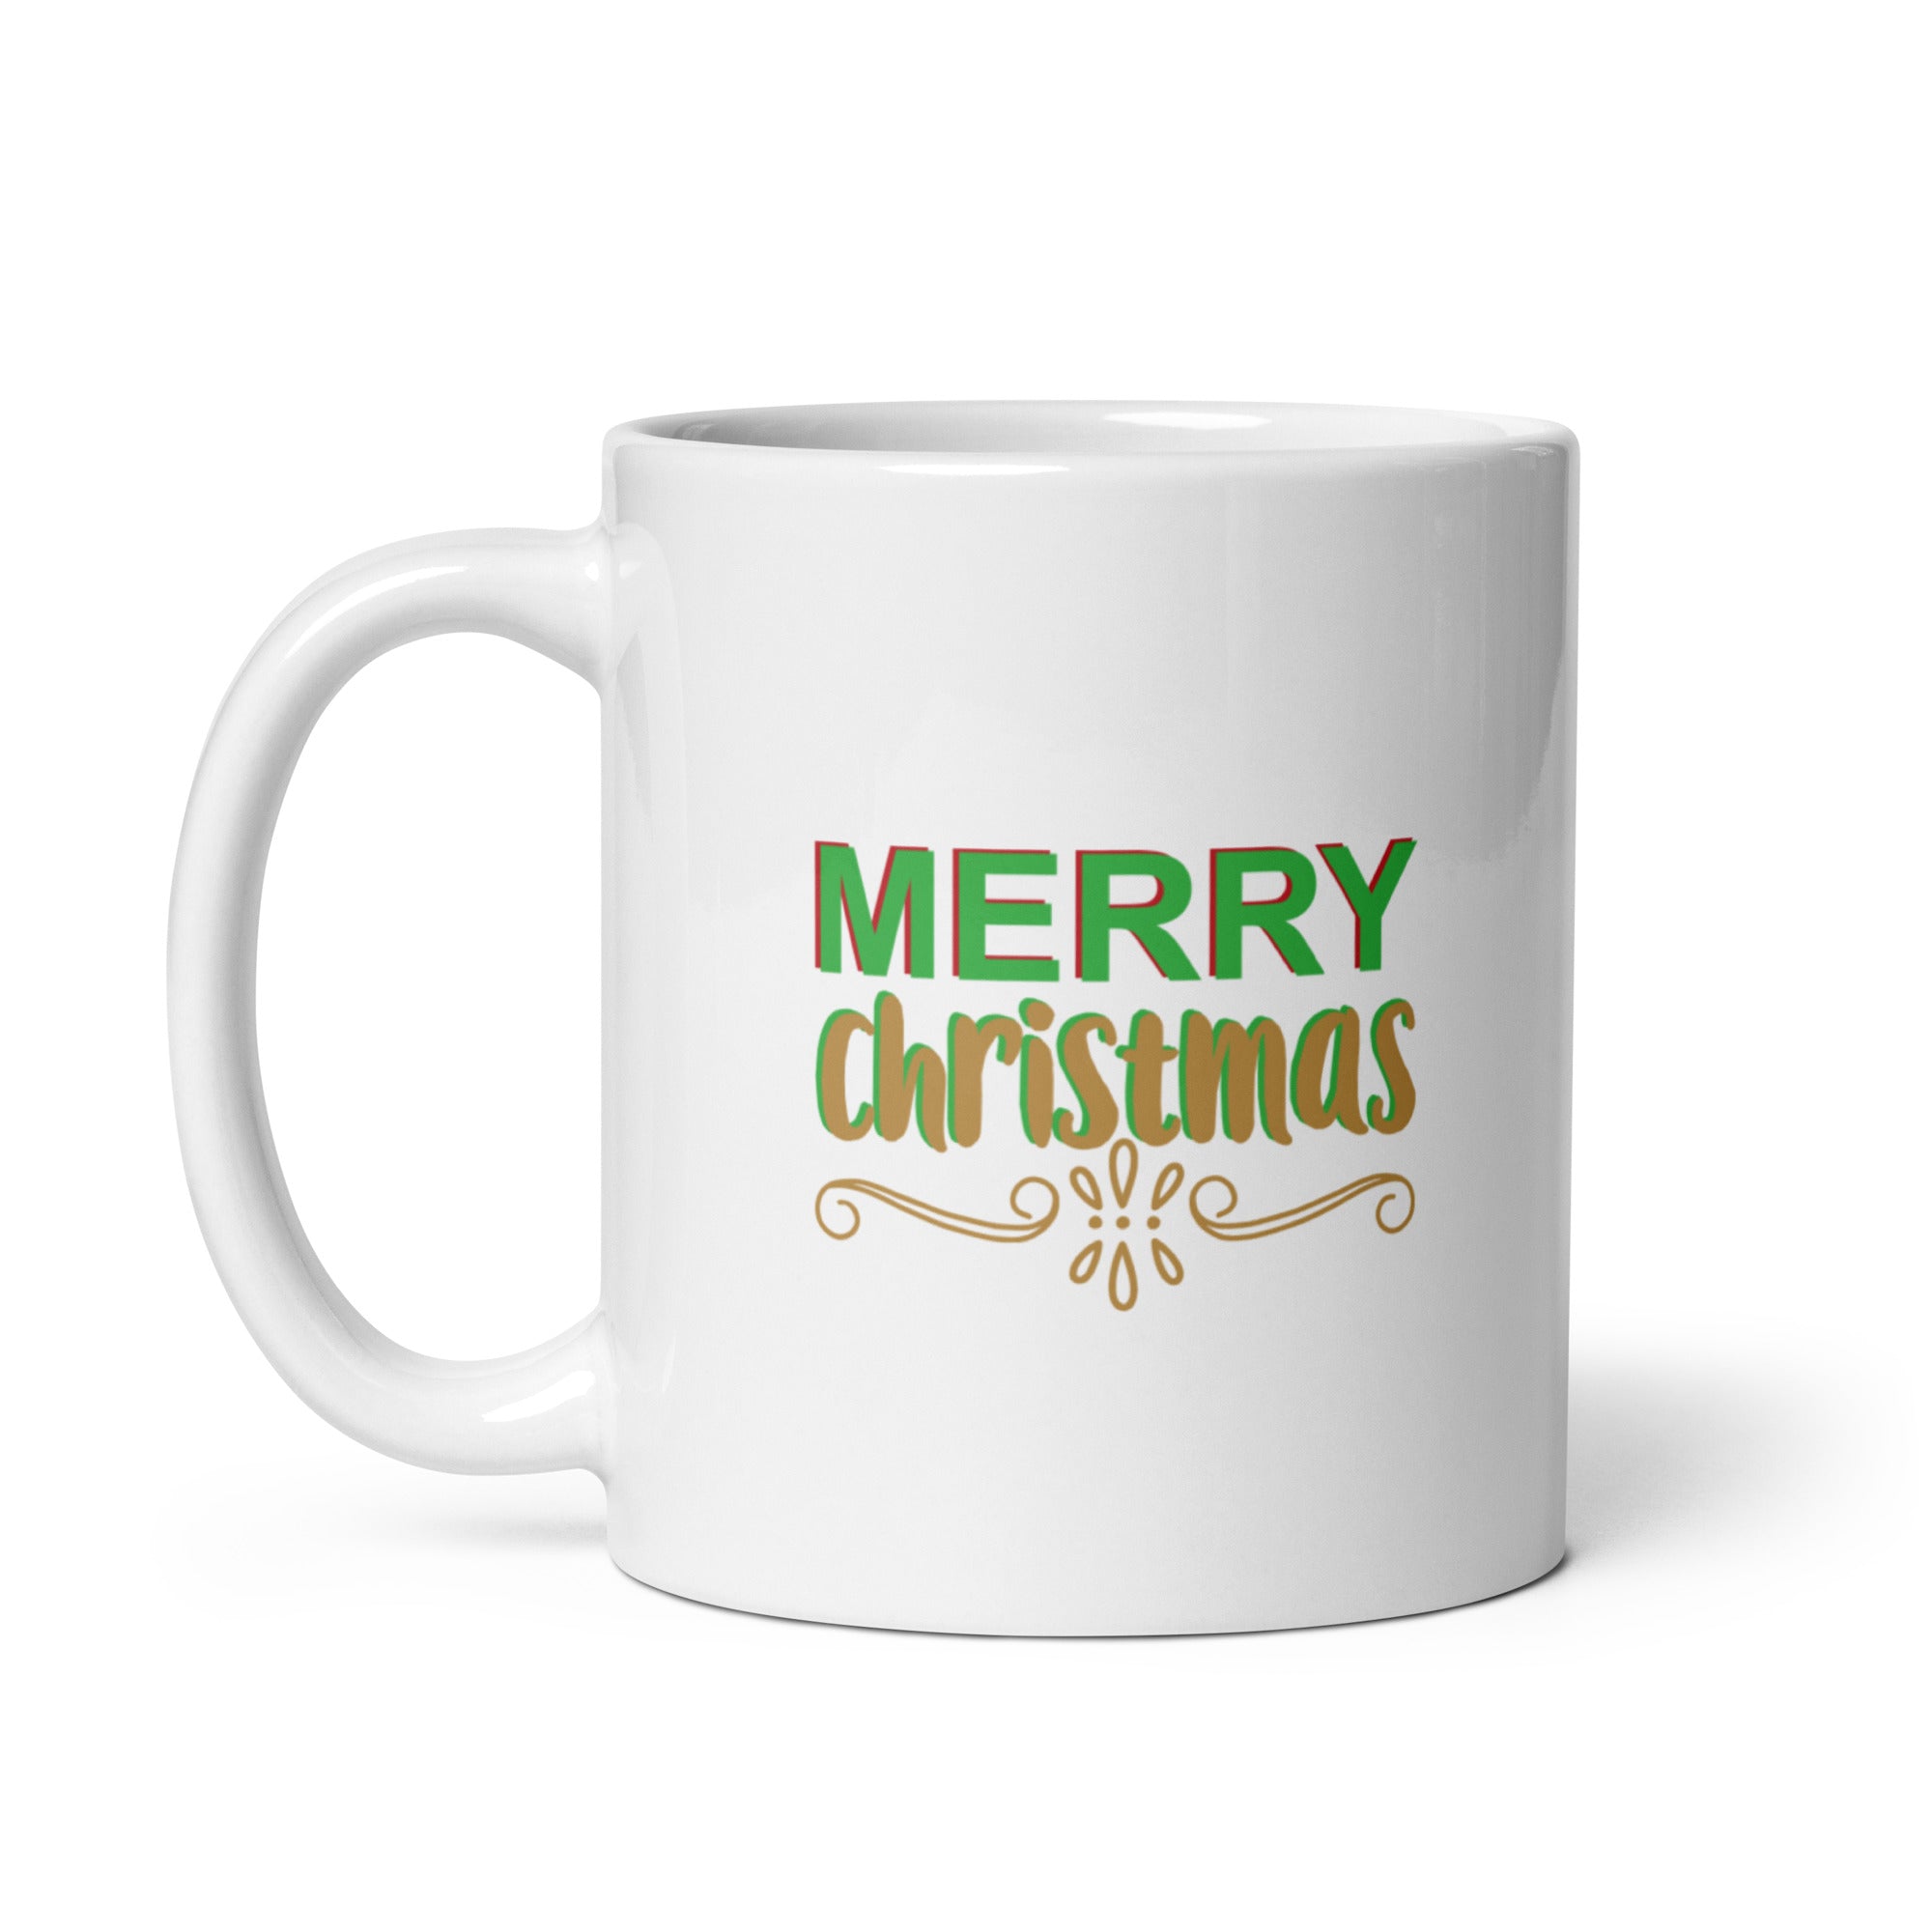 Merry Christmas - White glossy mug